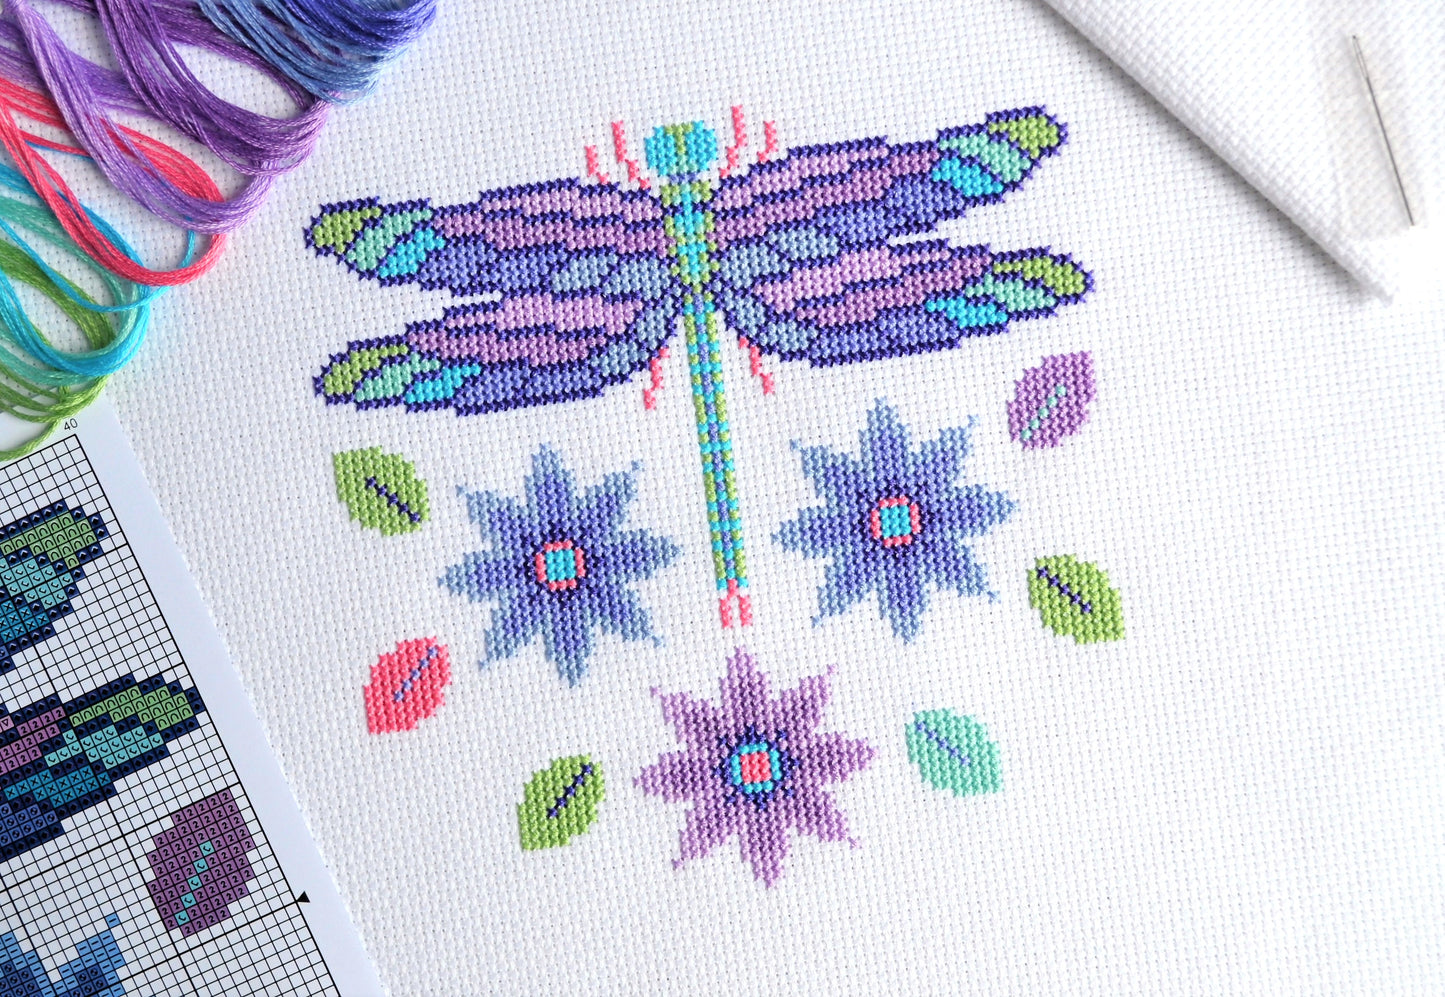 Dragonfly Cross Stitch Kit